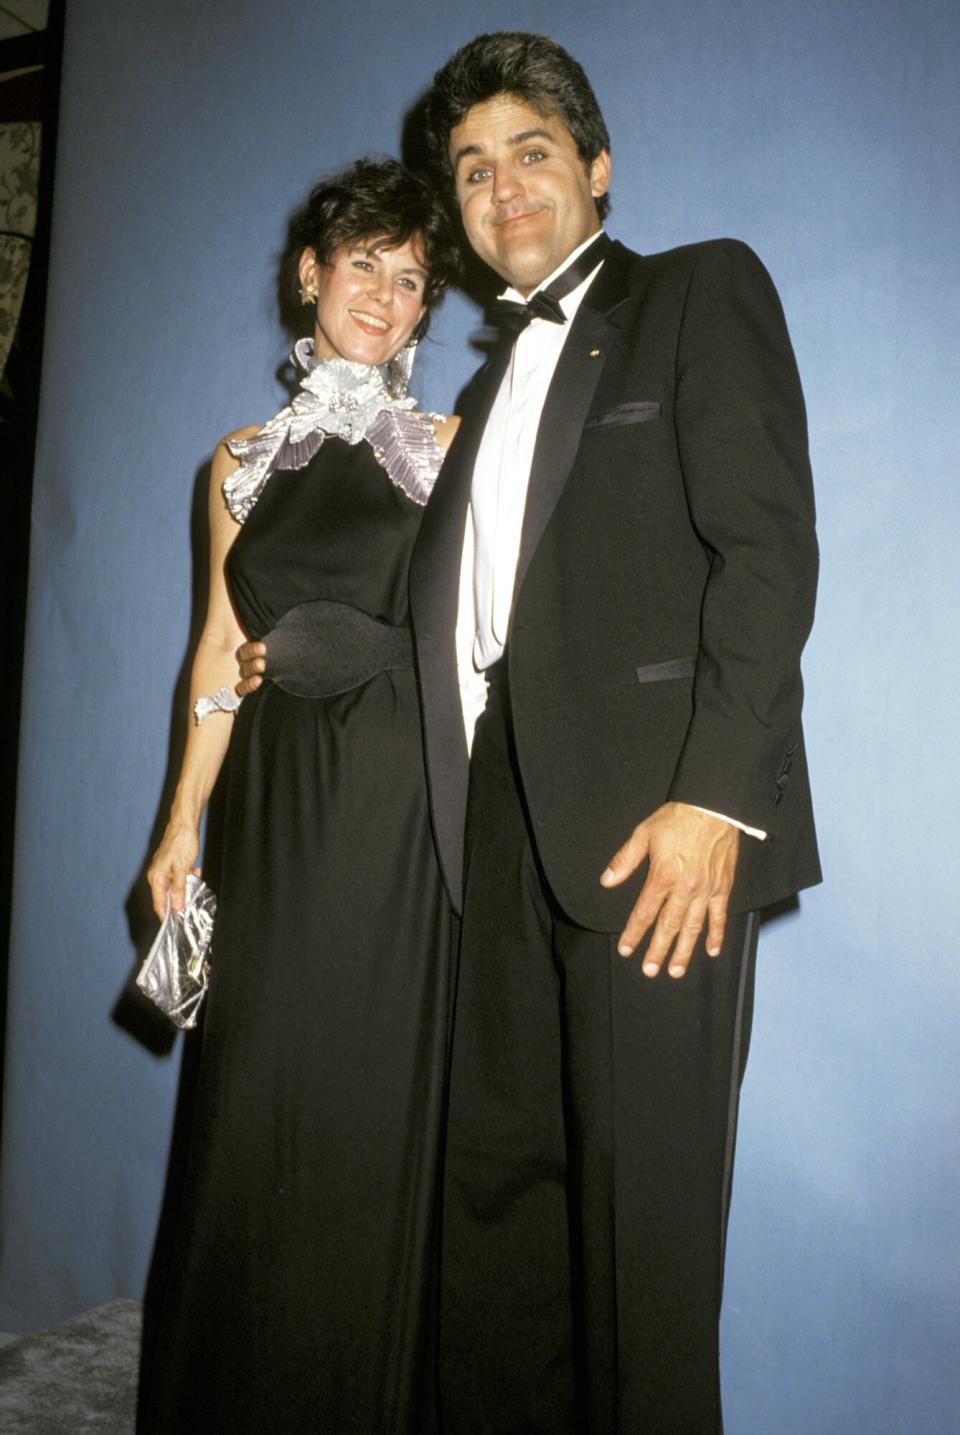 Mavis Leno and Jay Leno during 39th Annual Emmy Awards - September 20, 1987 at Pasadena Civic Auditorium in Pasadena, California, United States